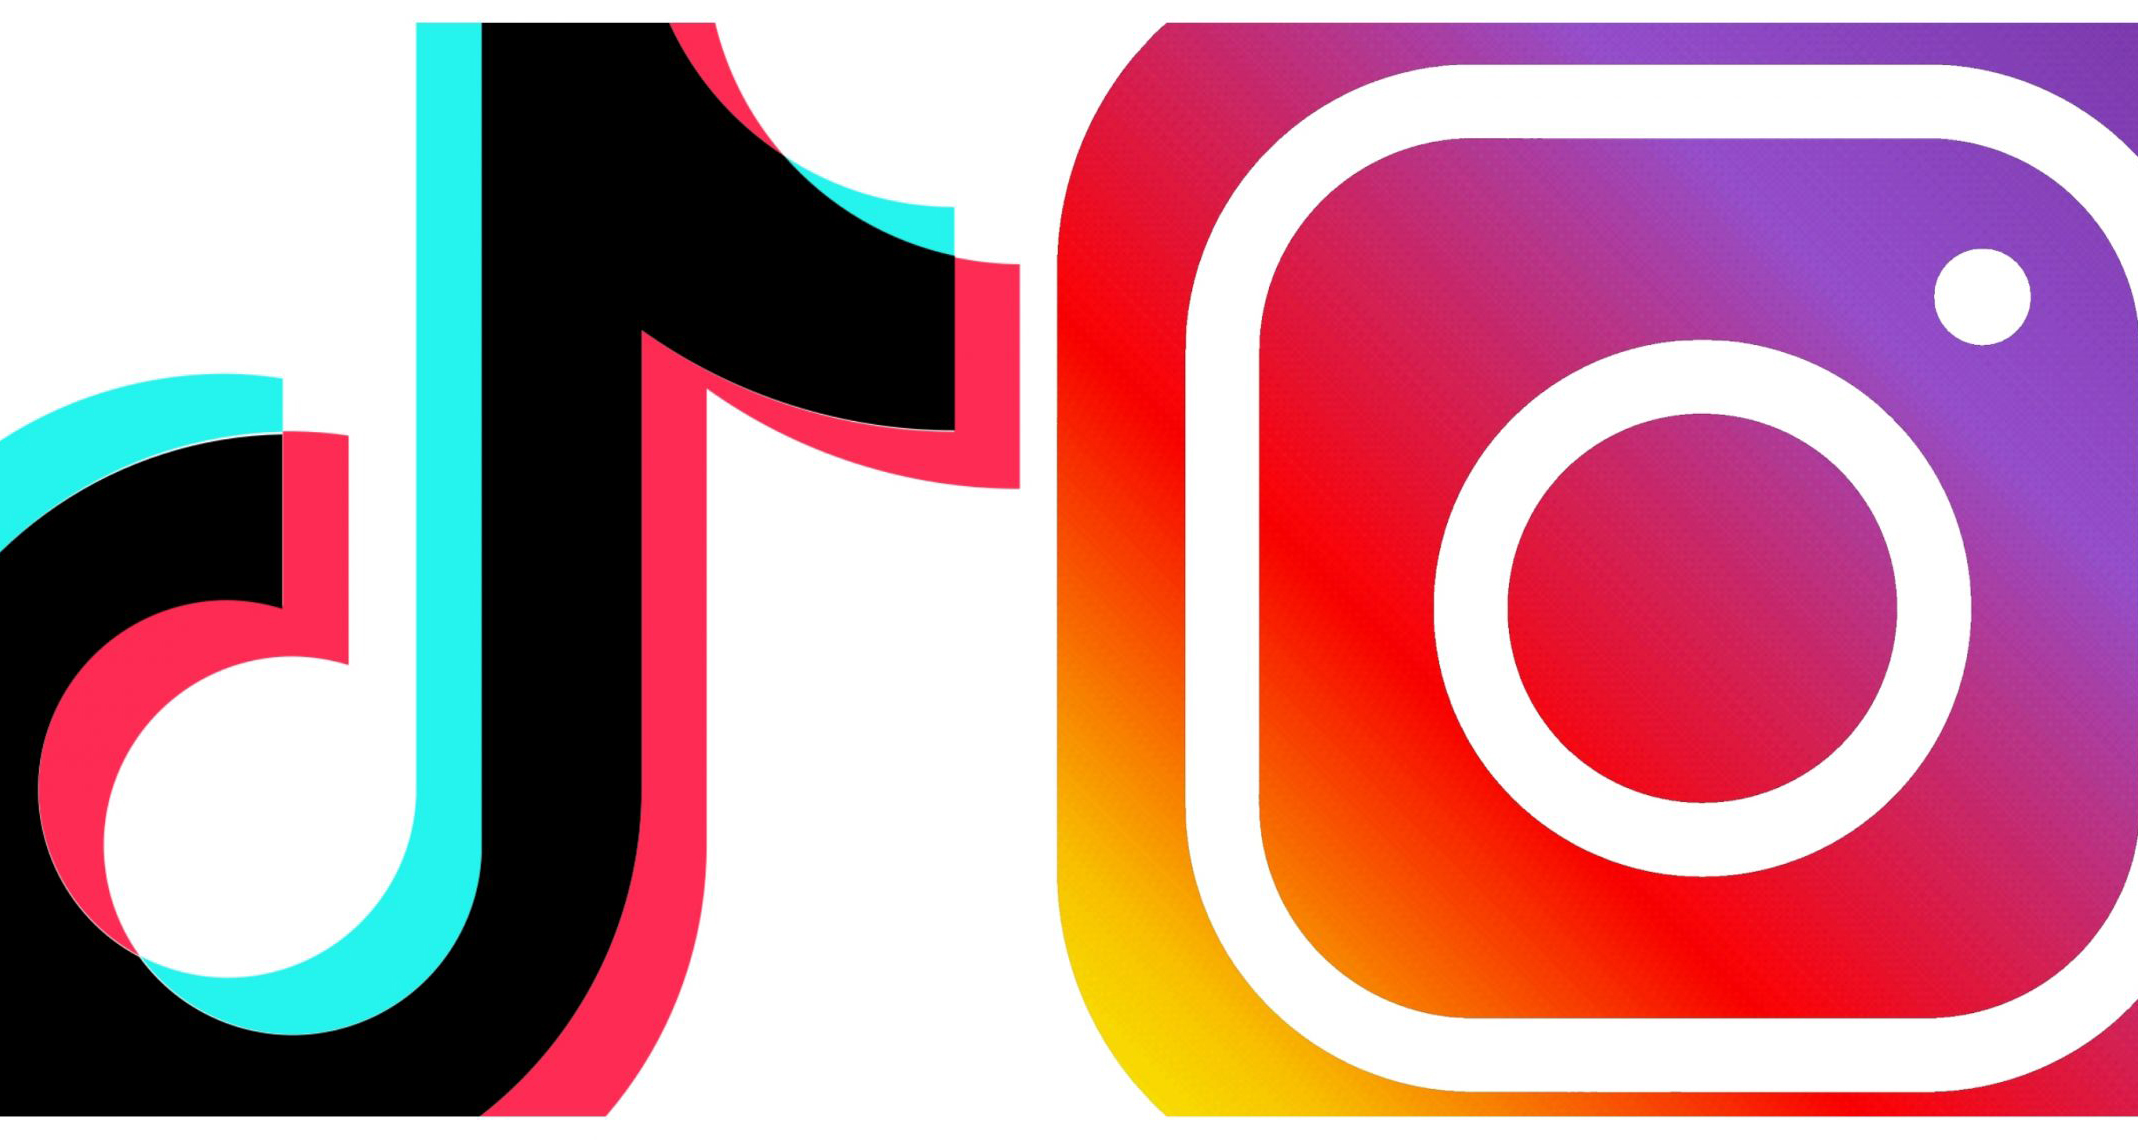 Reels, Instagram’s TikTok clone